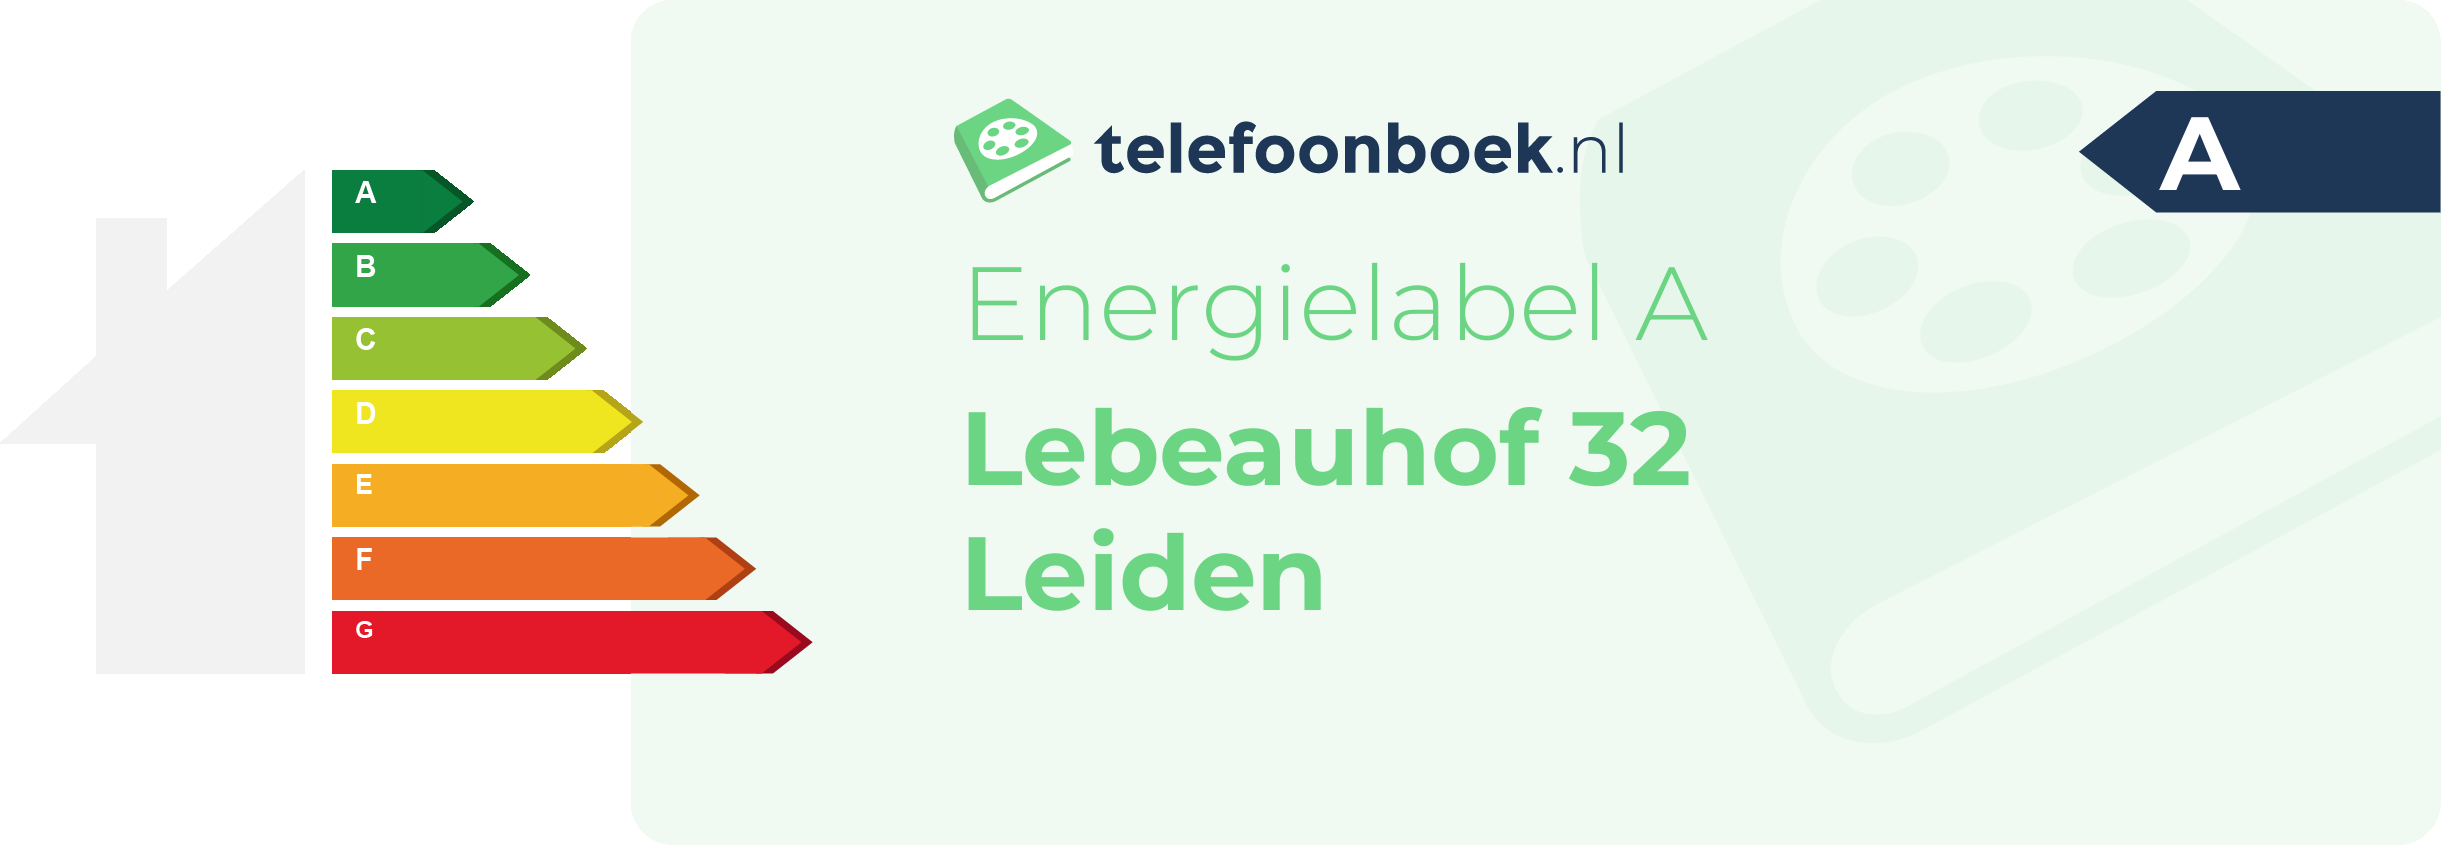 Energielabel Lebeauhof 32 Leiden